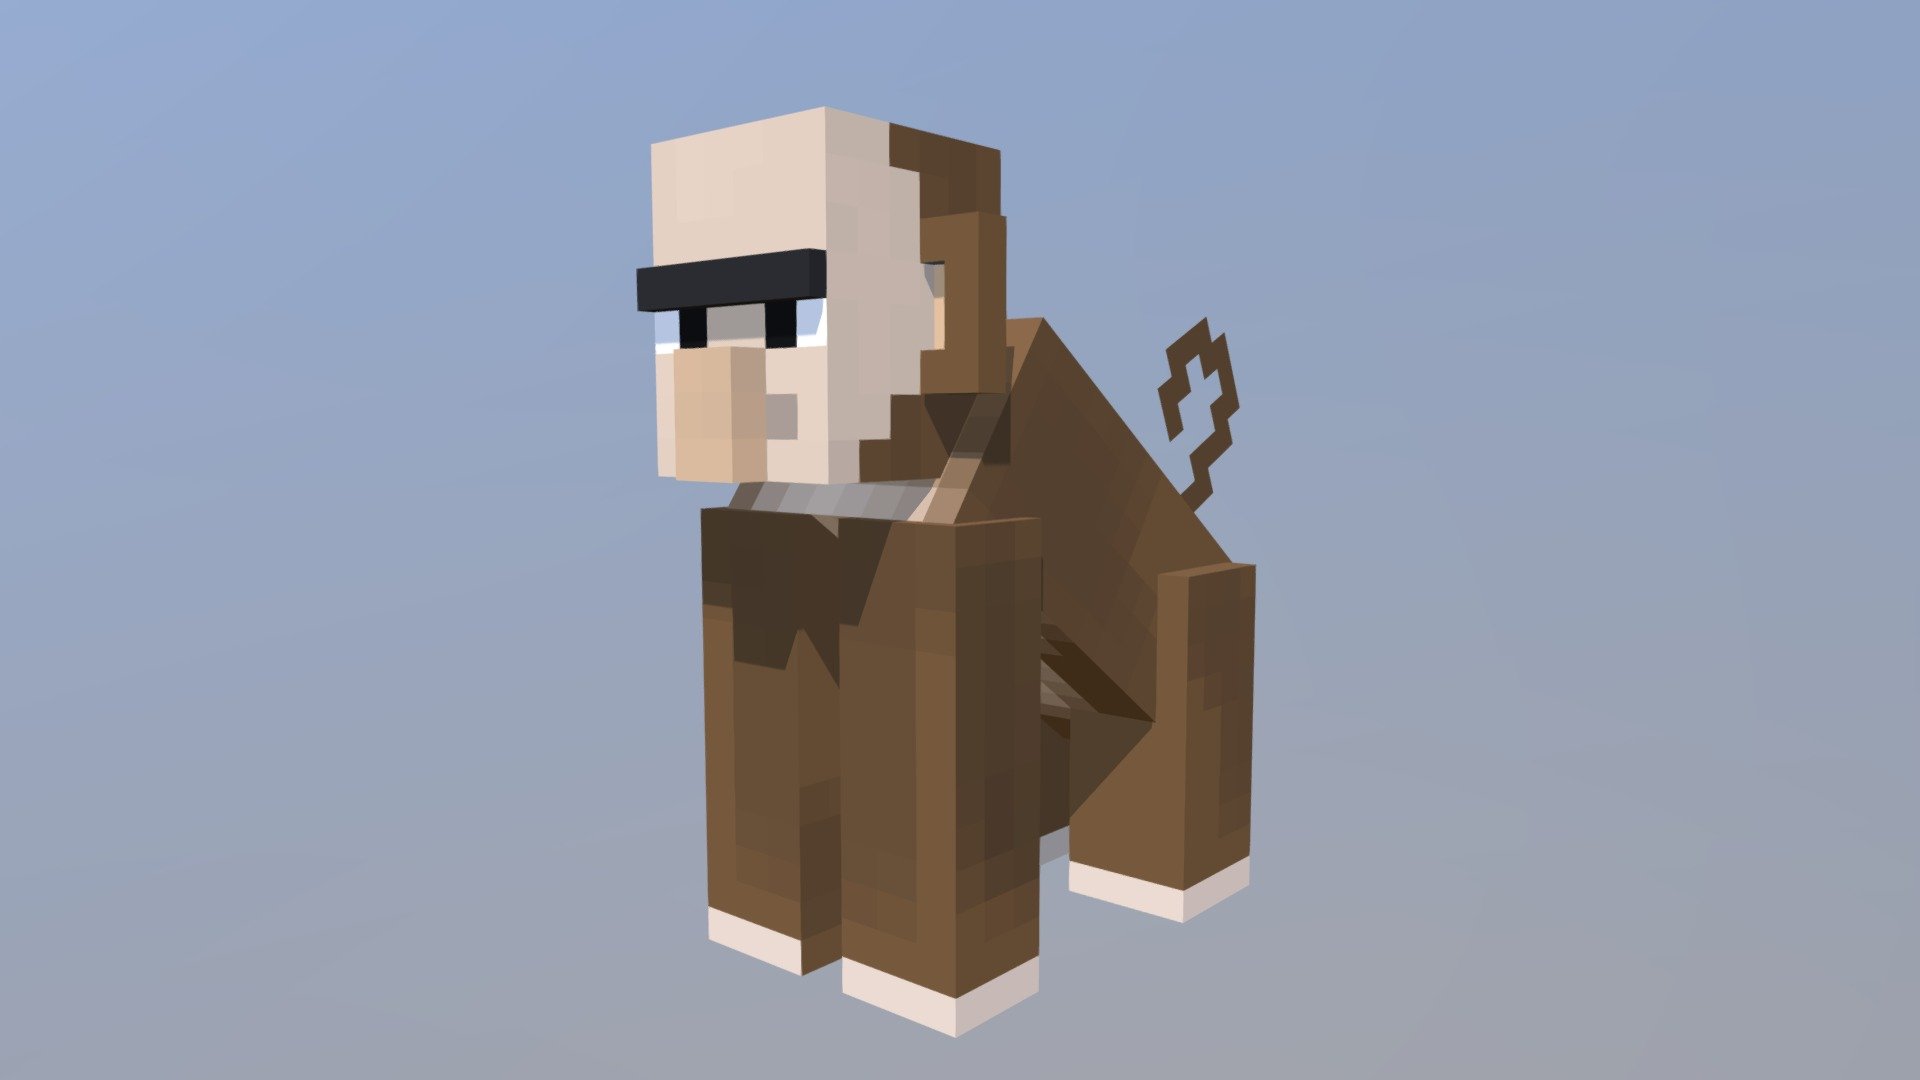 Minecraft - "Testificate Monkey" - 3D model by Crafty-Adventurer.